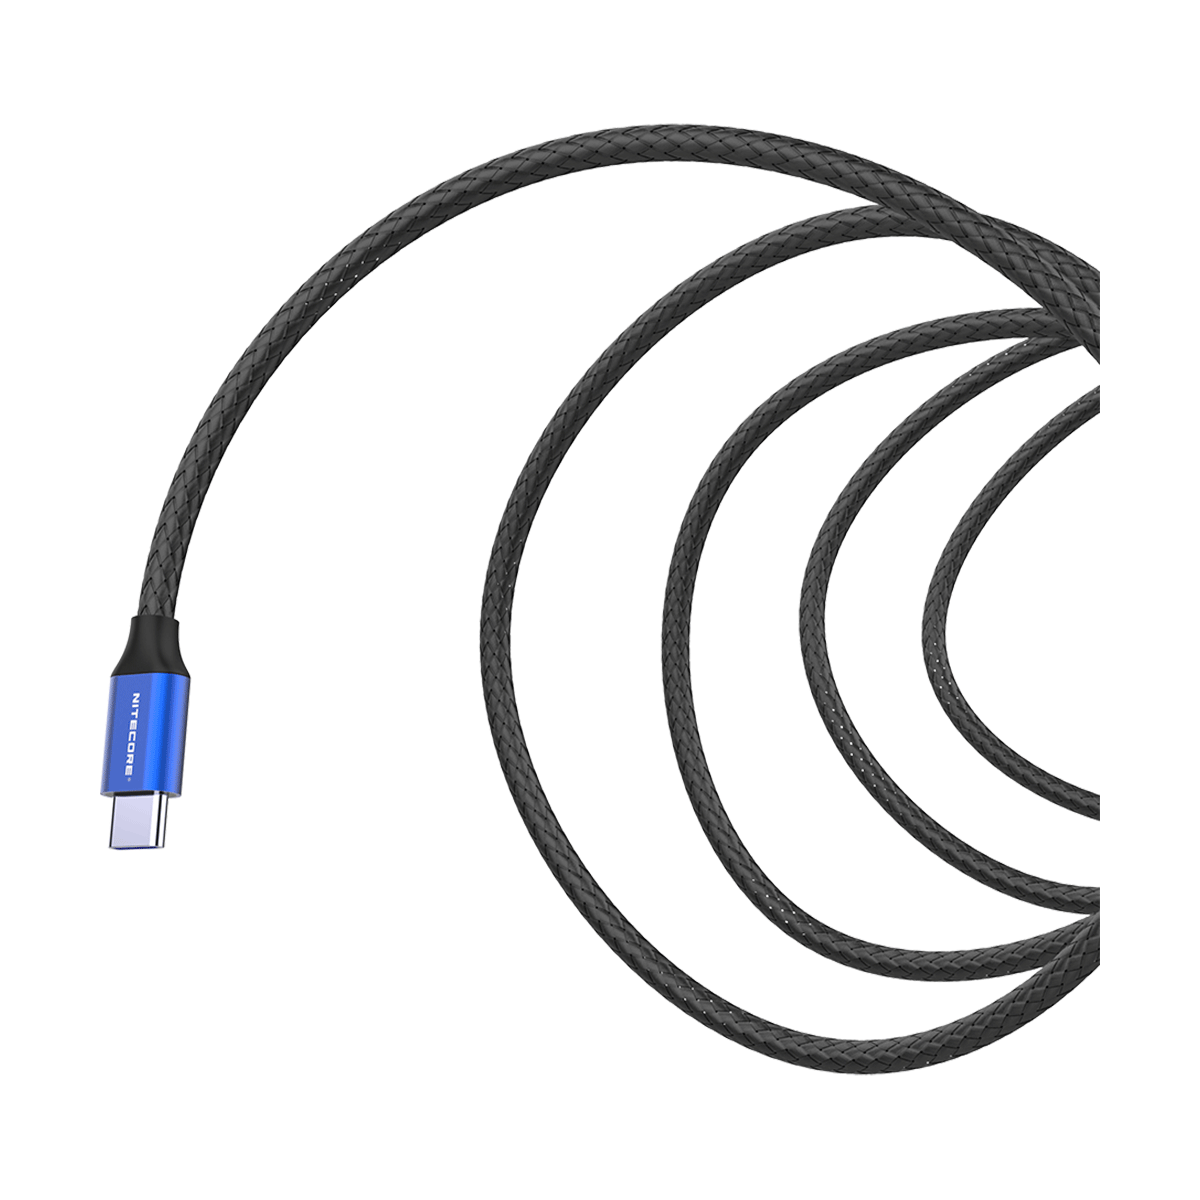 NITECORE USB-C TO USB 2.0 CHARGING CABLE (UAC20)